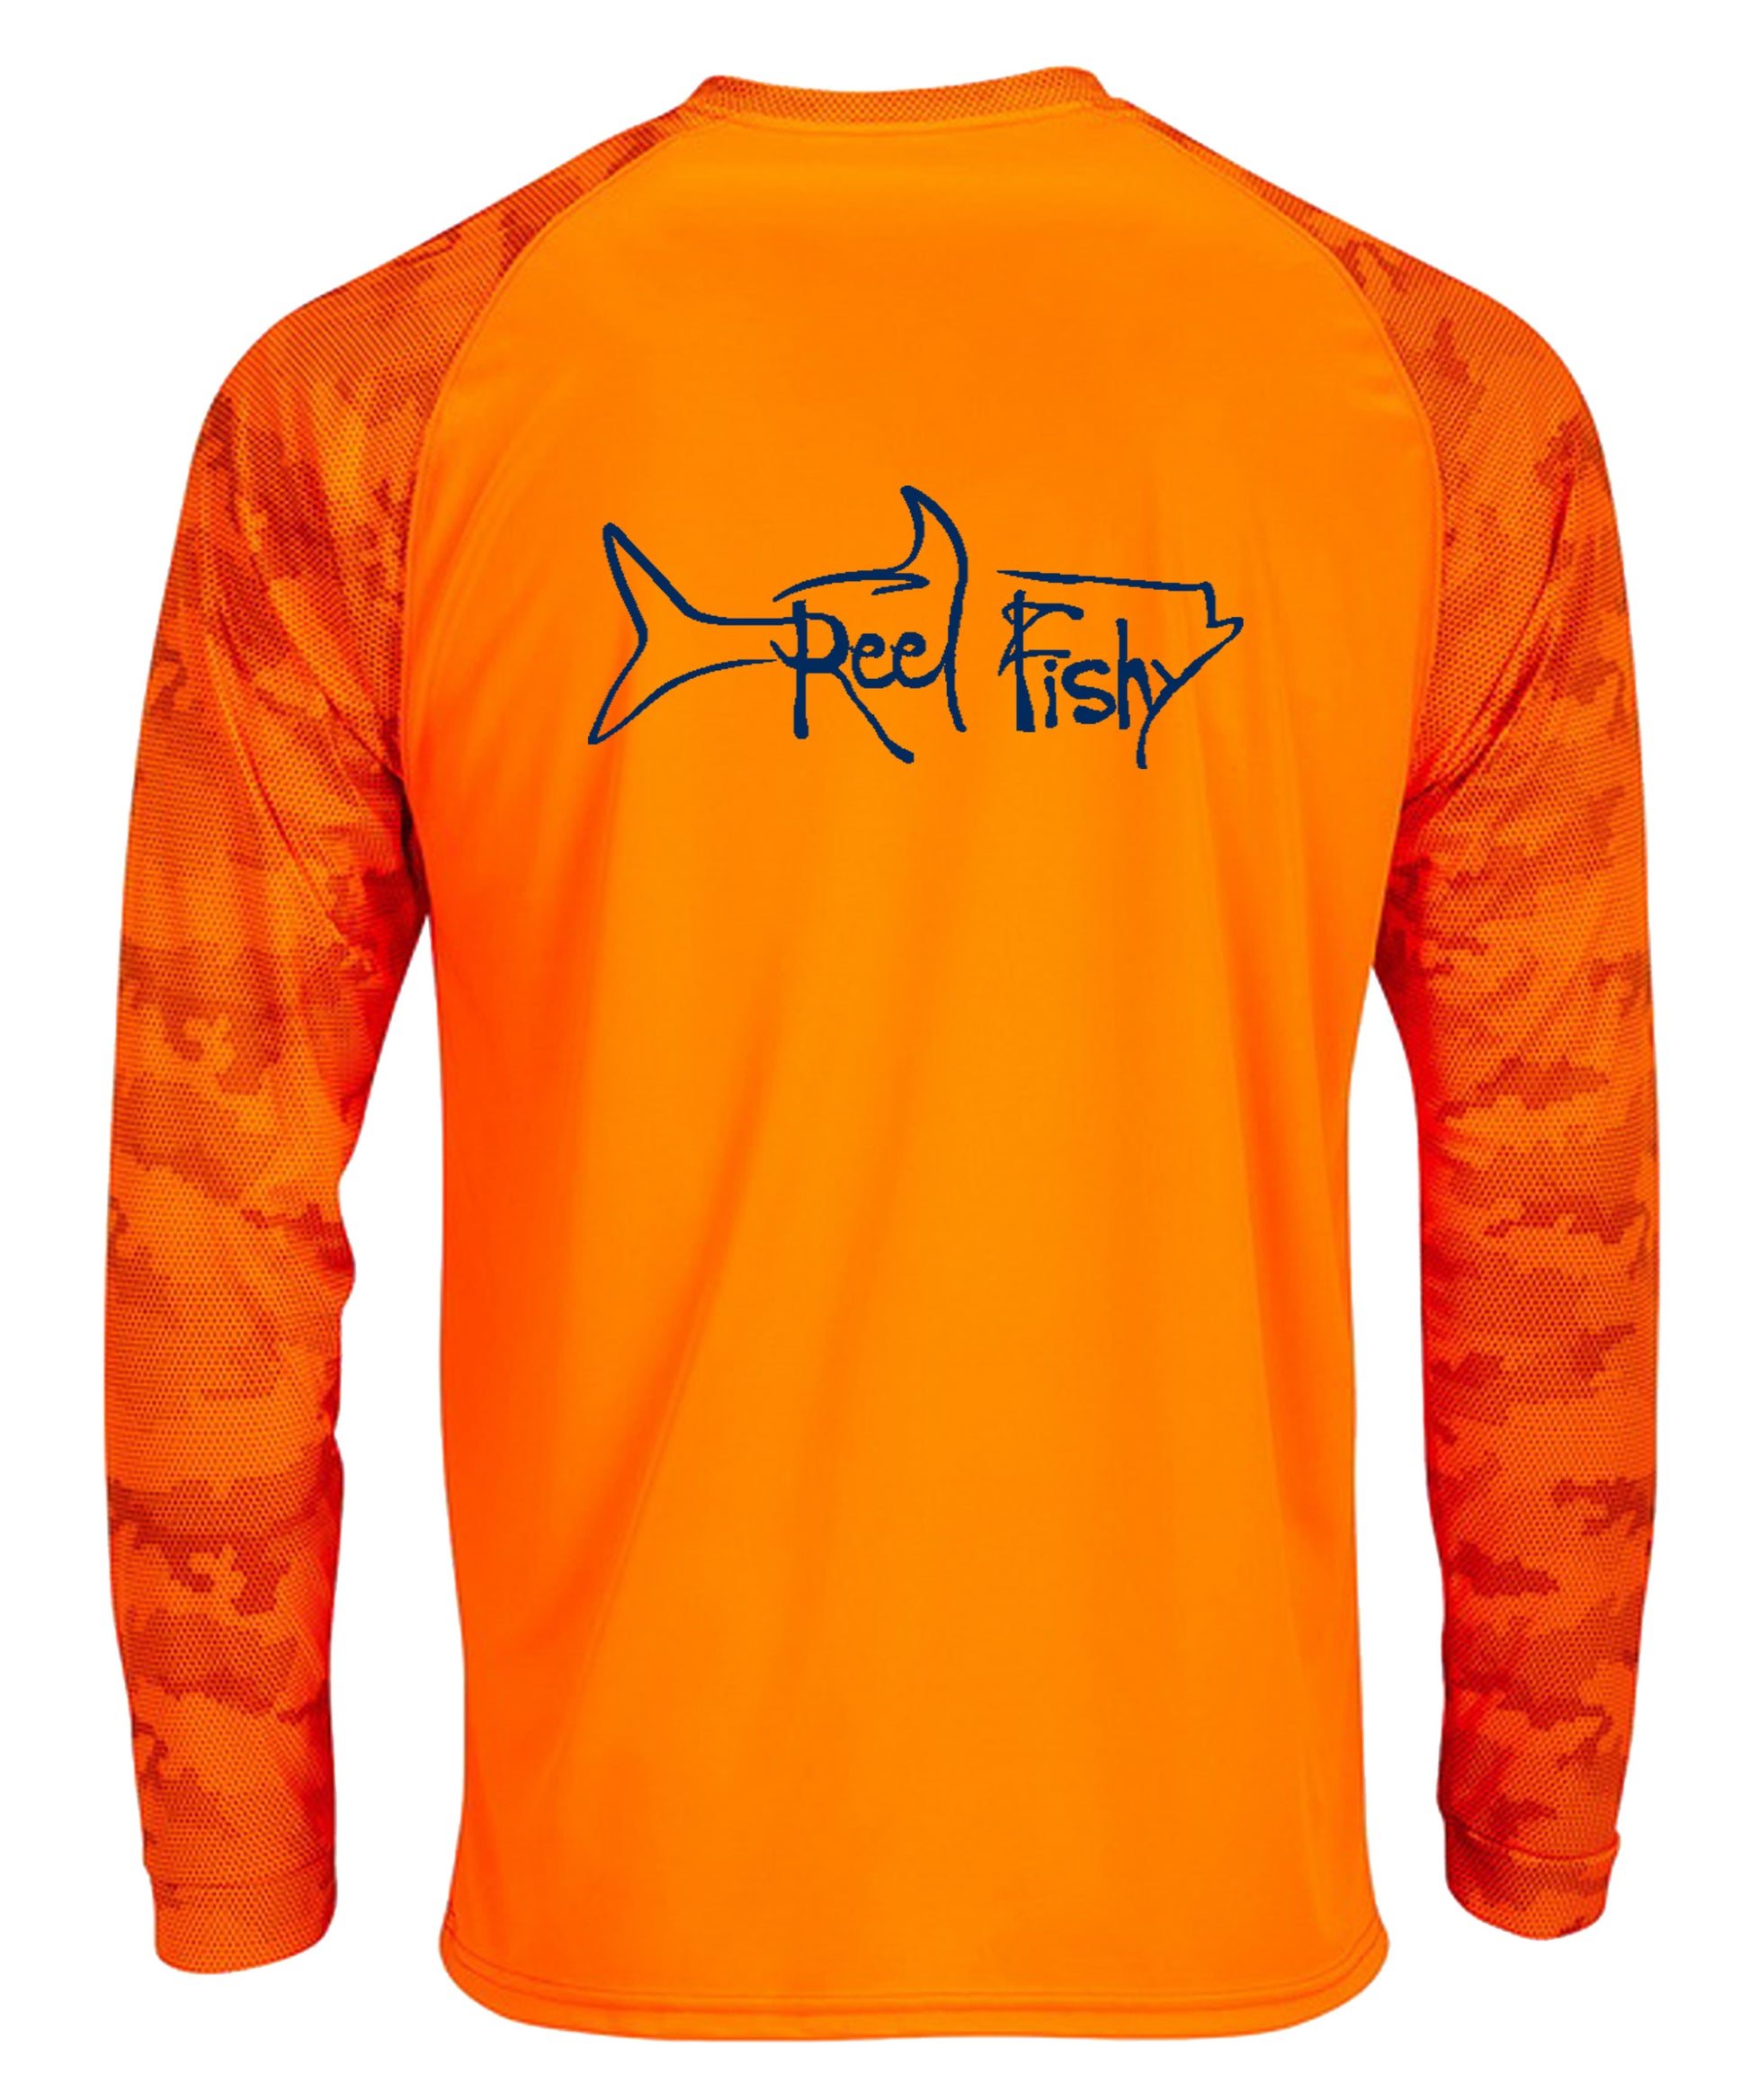 Youth Performance Long Sleeve Fishing Shirt with Hood - Topo Camo - Storm Gray - Large